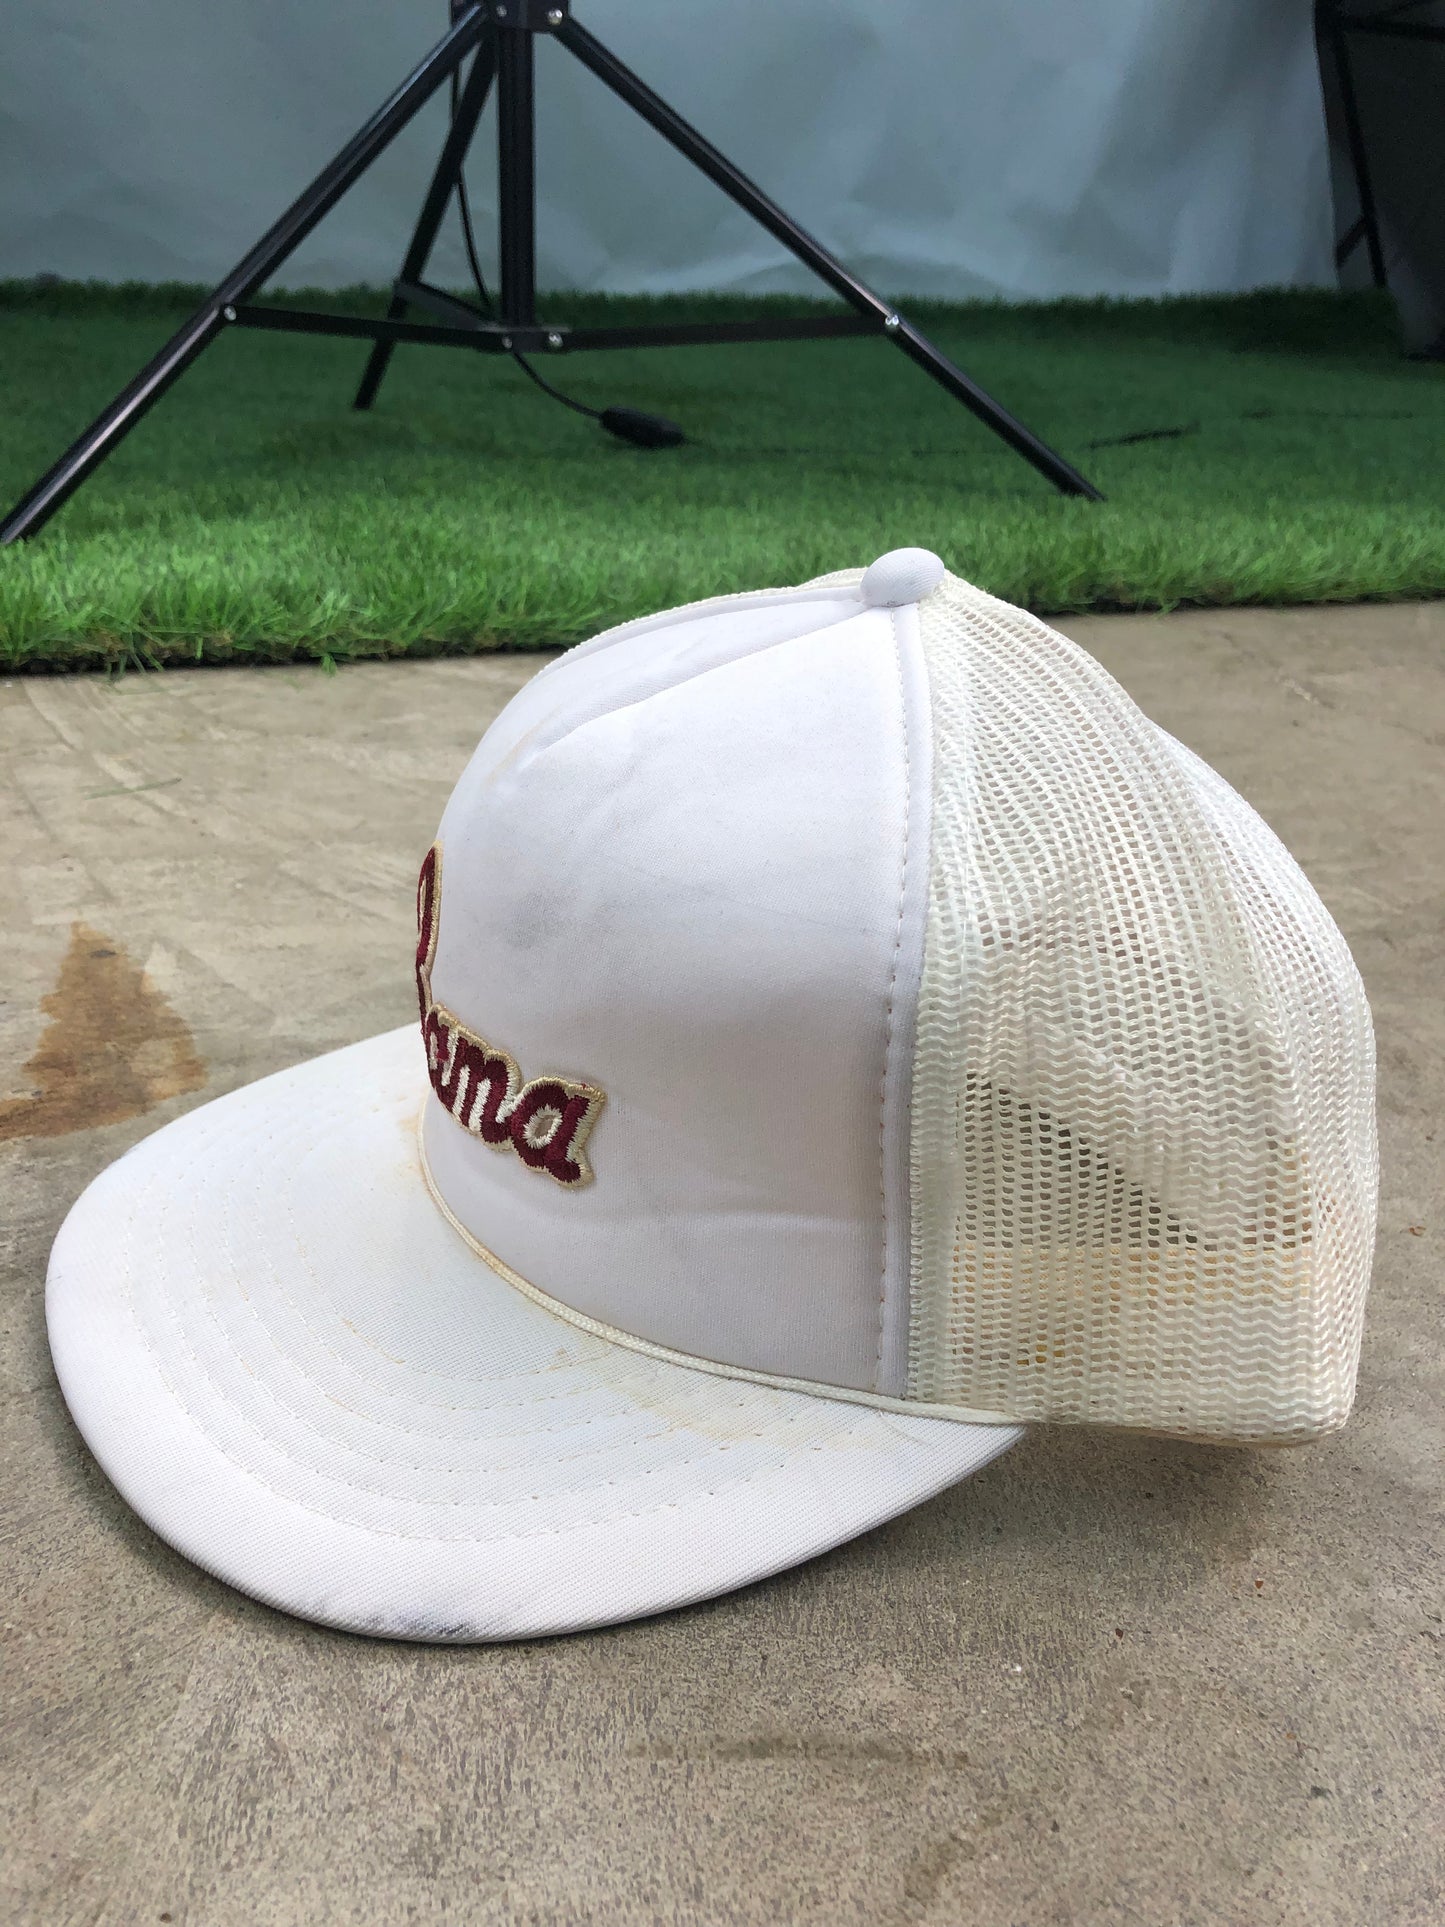 VTG Bama IronBowl Champs 21-14 Snapback Hat